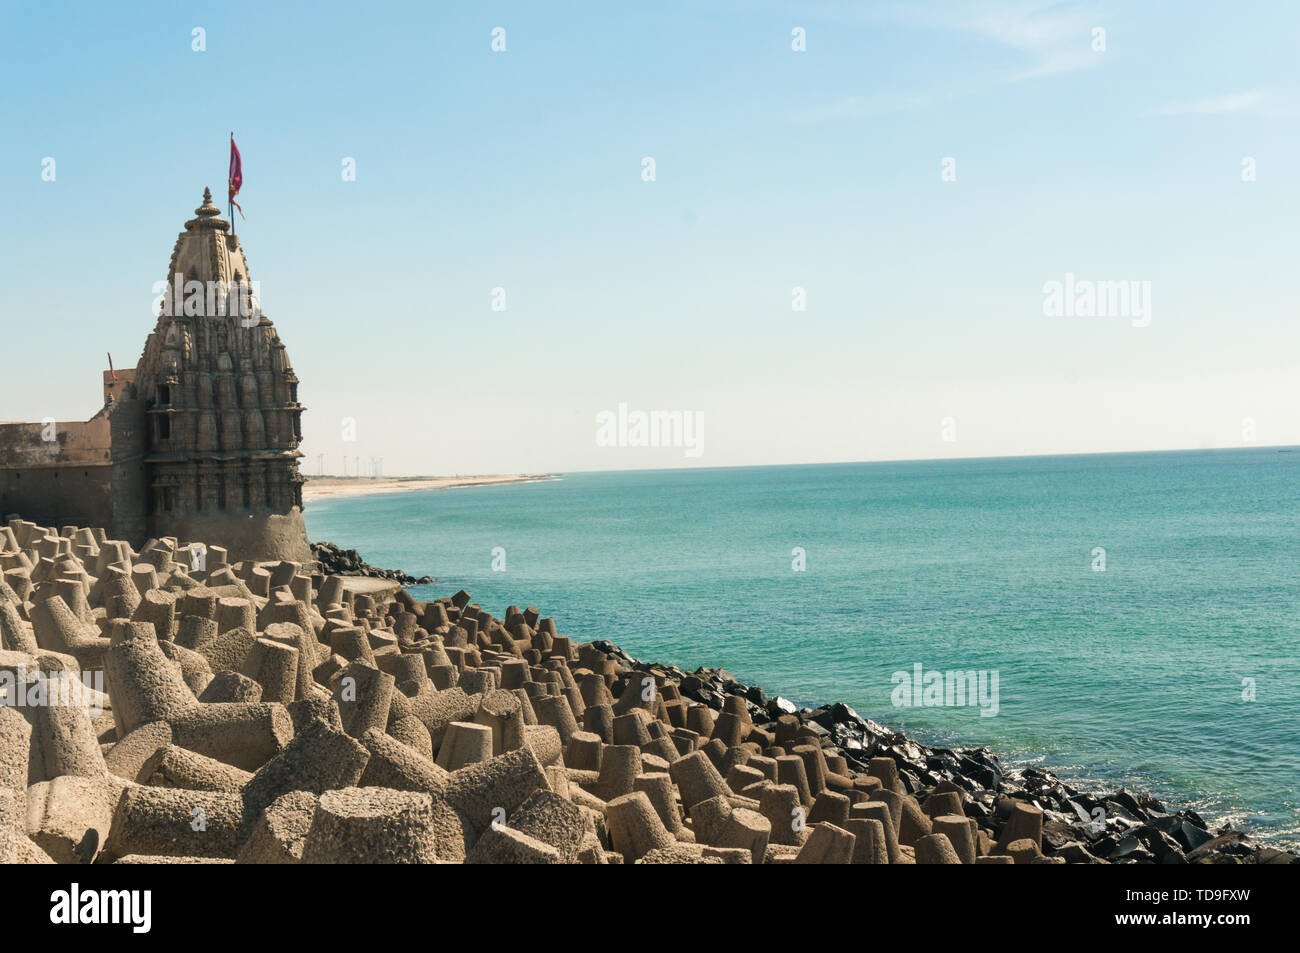 Lone hindu temple with flag on arabian sea coast with wave breakers Stock Photo